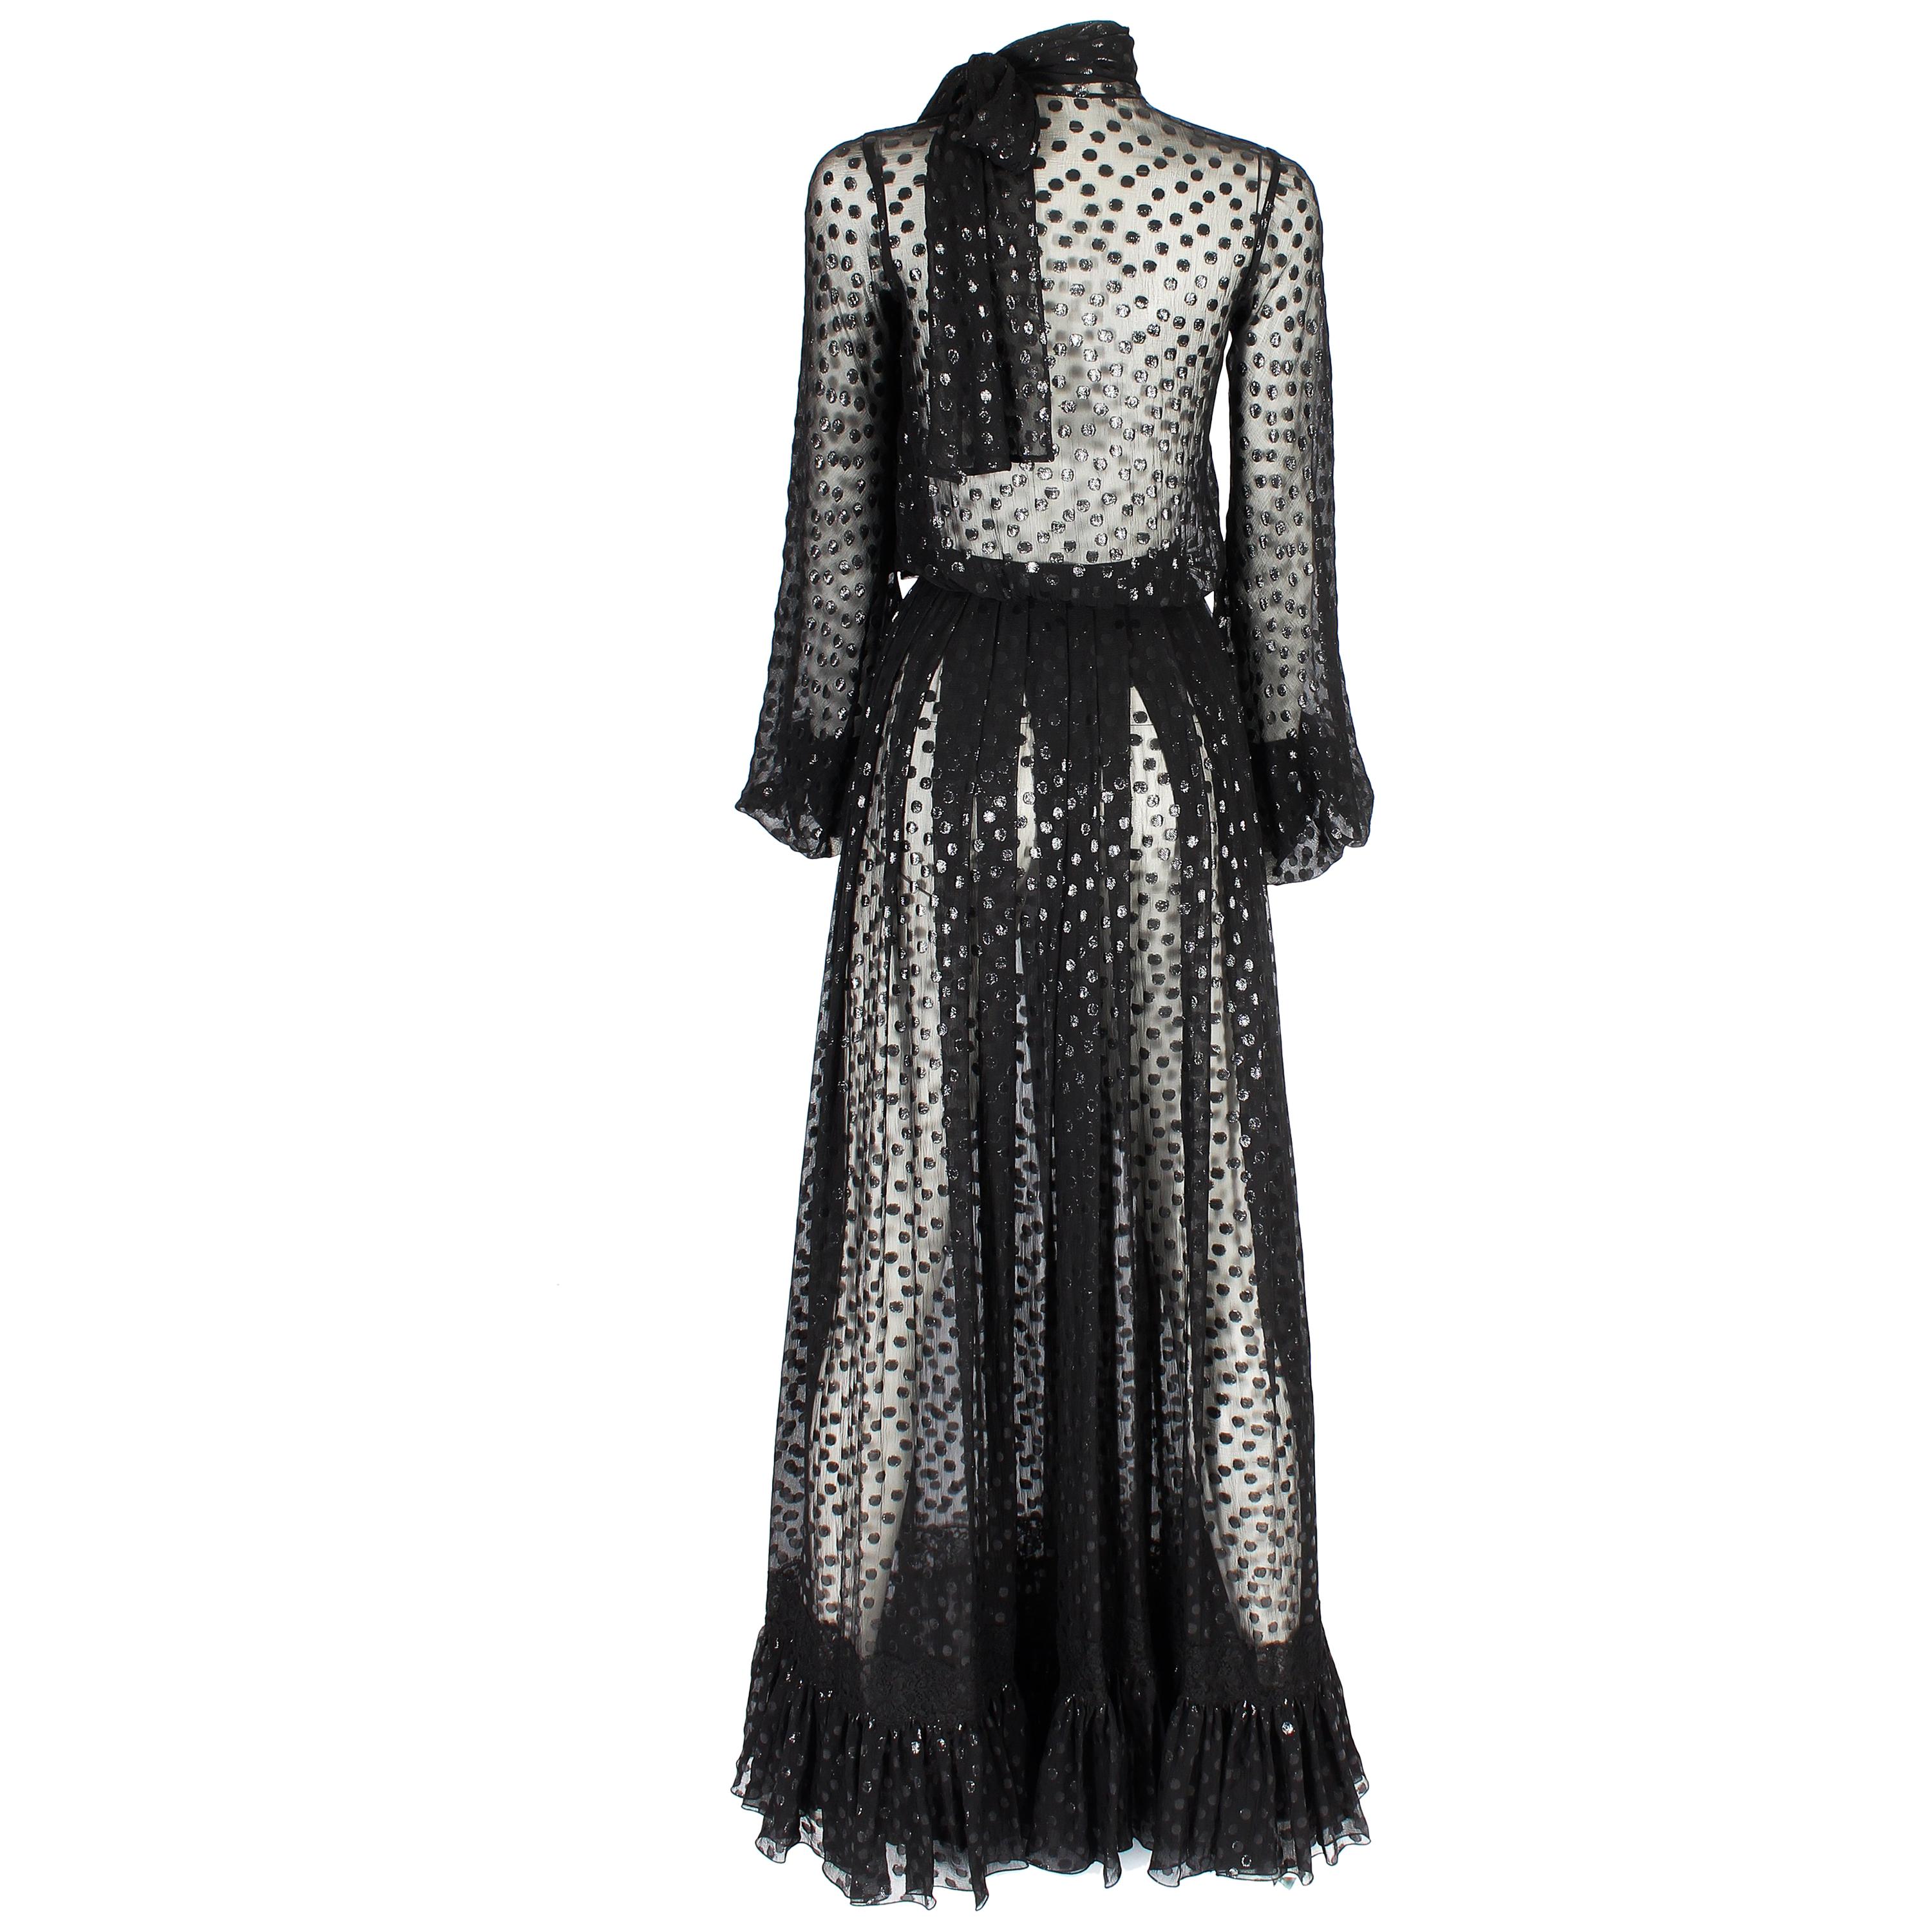 Jean Louis Scherrer haute couture black polka dots sheer evening gown, f/w 2005